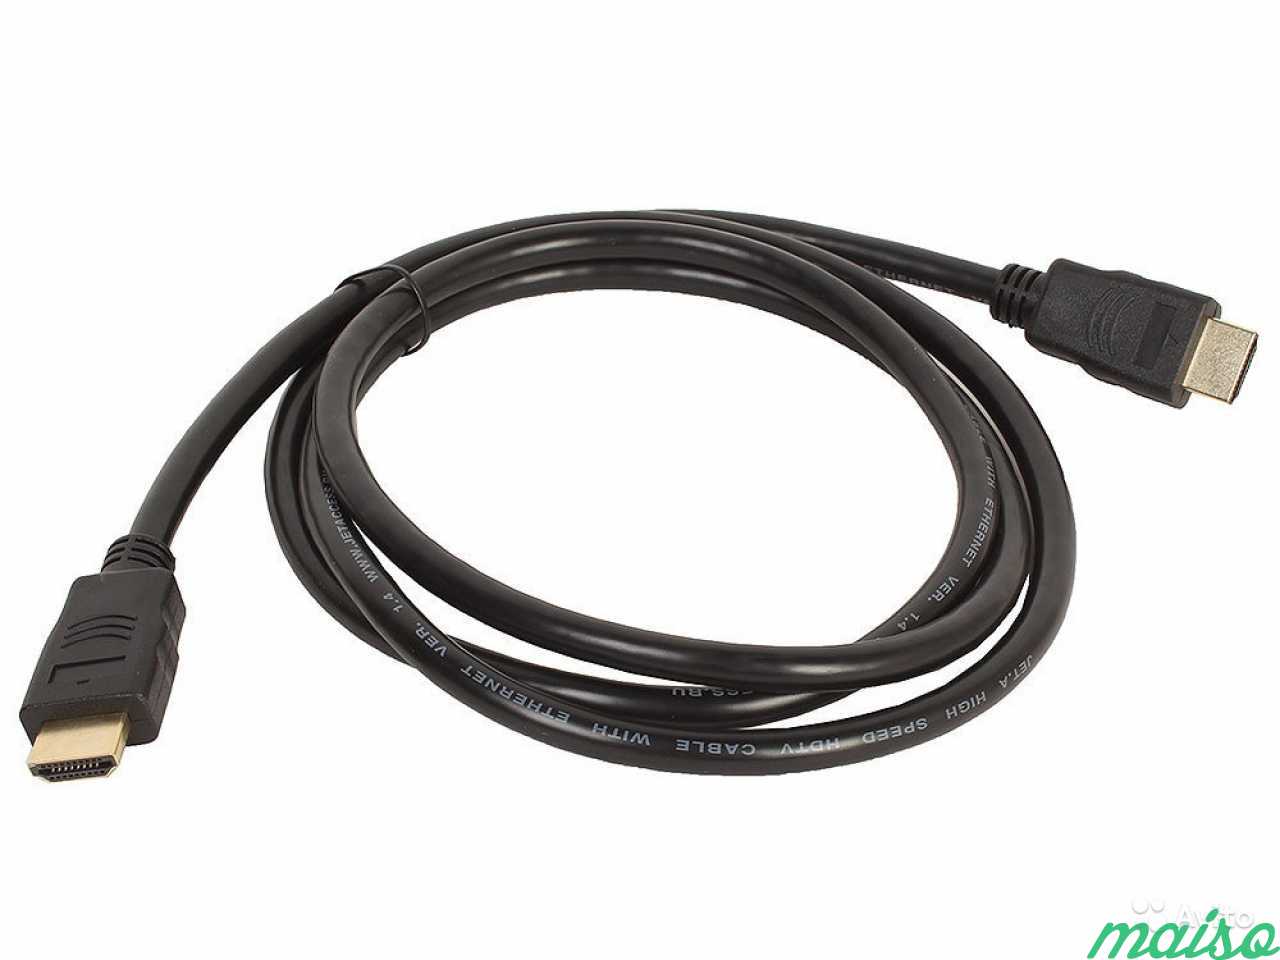 Купить кабель петербург. Кабель Jet.a ja-hd9 1.5 м. Кабель Jet.a ja-hd8 2 м. HDMI кабель 1,5 метра. Шнур HDMI-HDMI , 1.5 М..